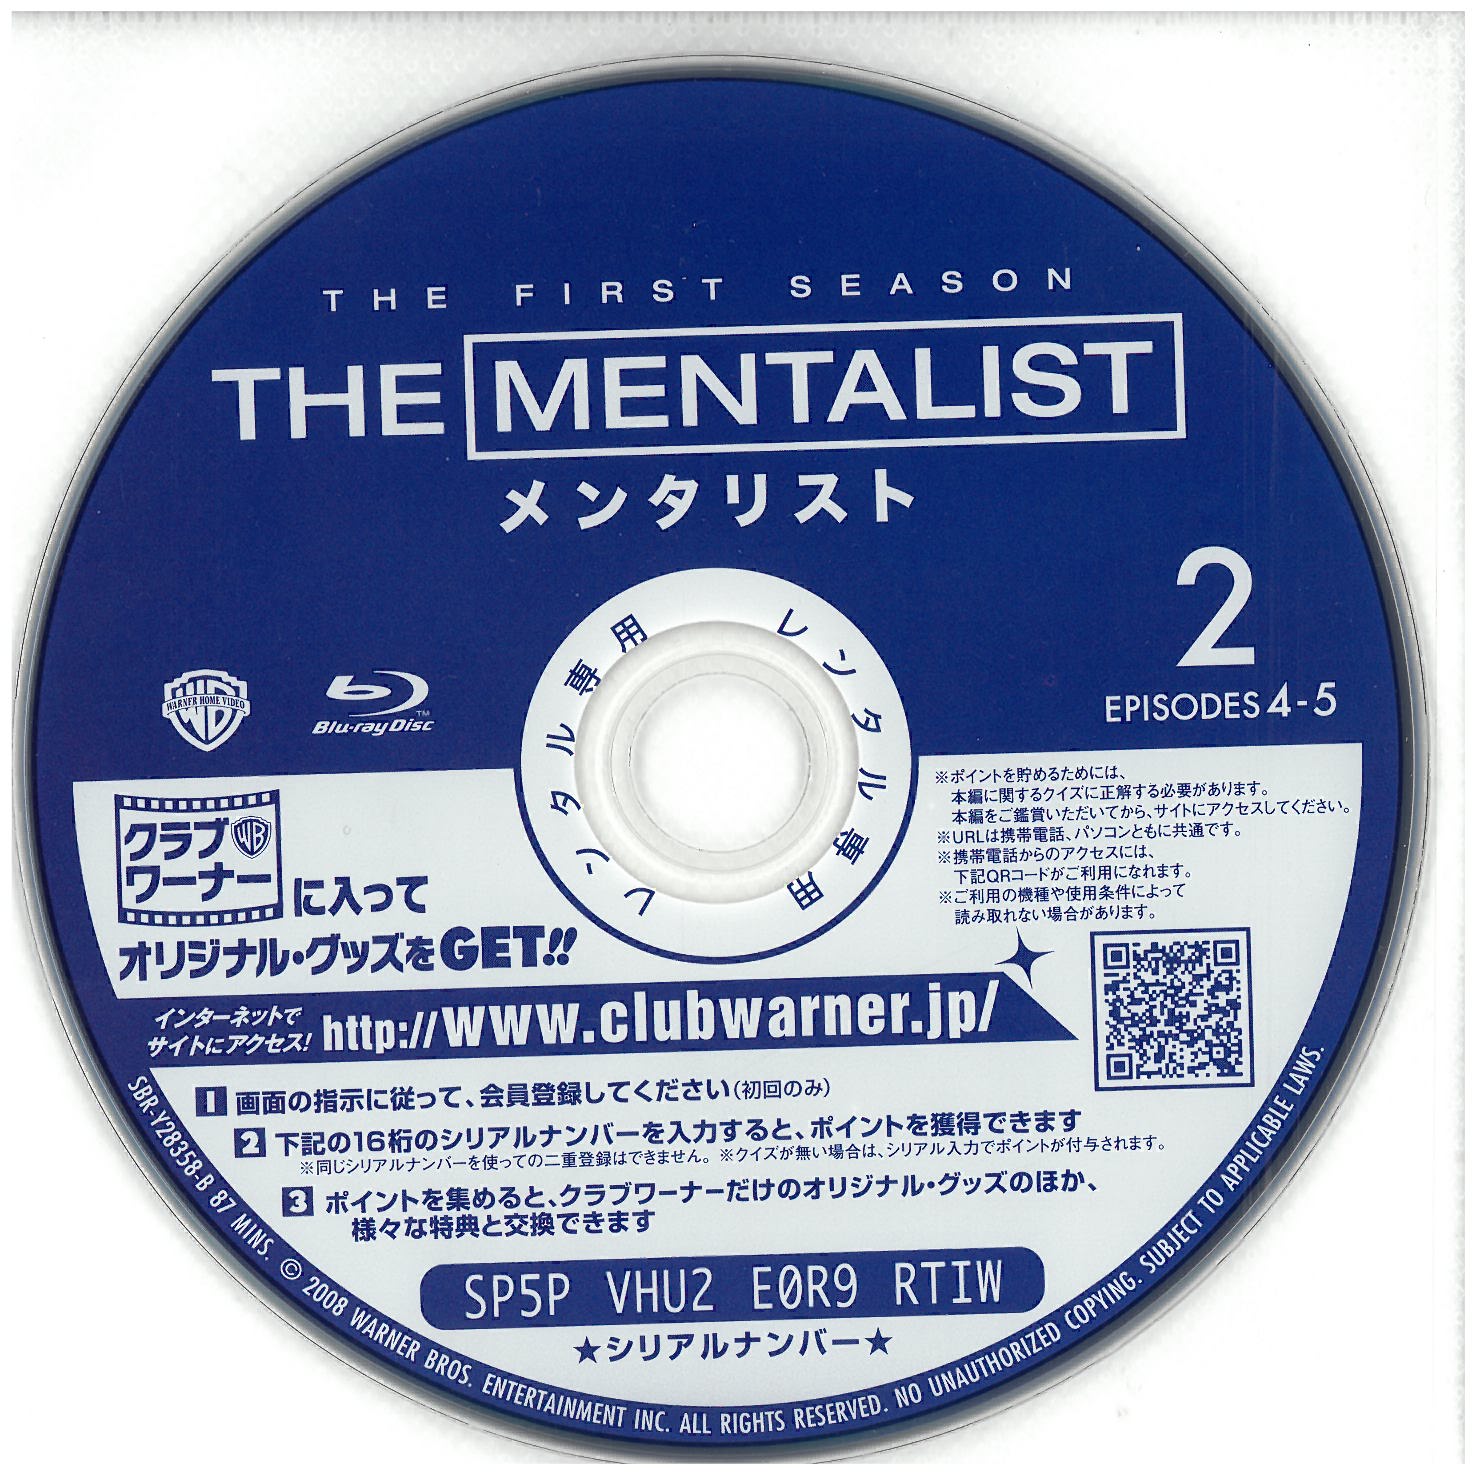 THE TENTALIST メンタリスト ザ・ファースト・シーズン vol.2 Blu-ray SBR-Y28358-B【ケースなし】中古DVD_f